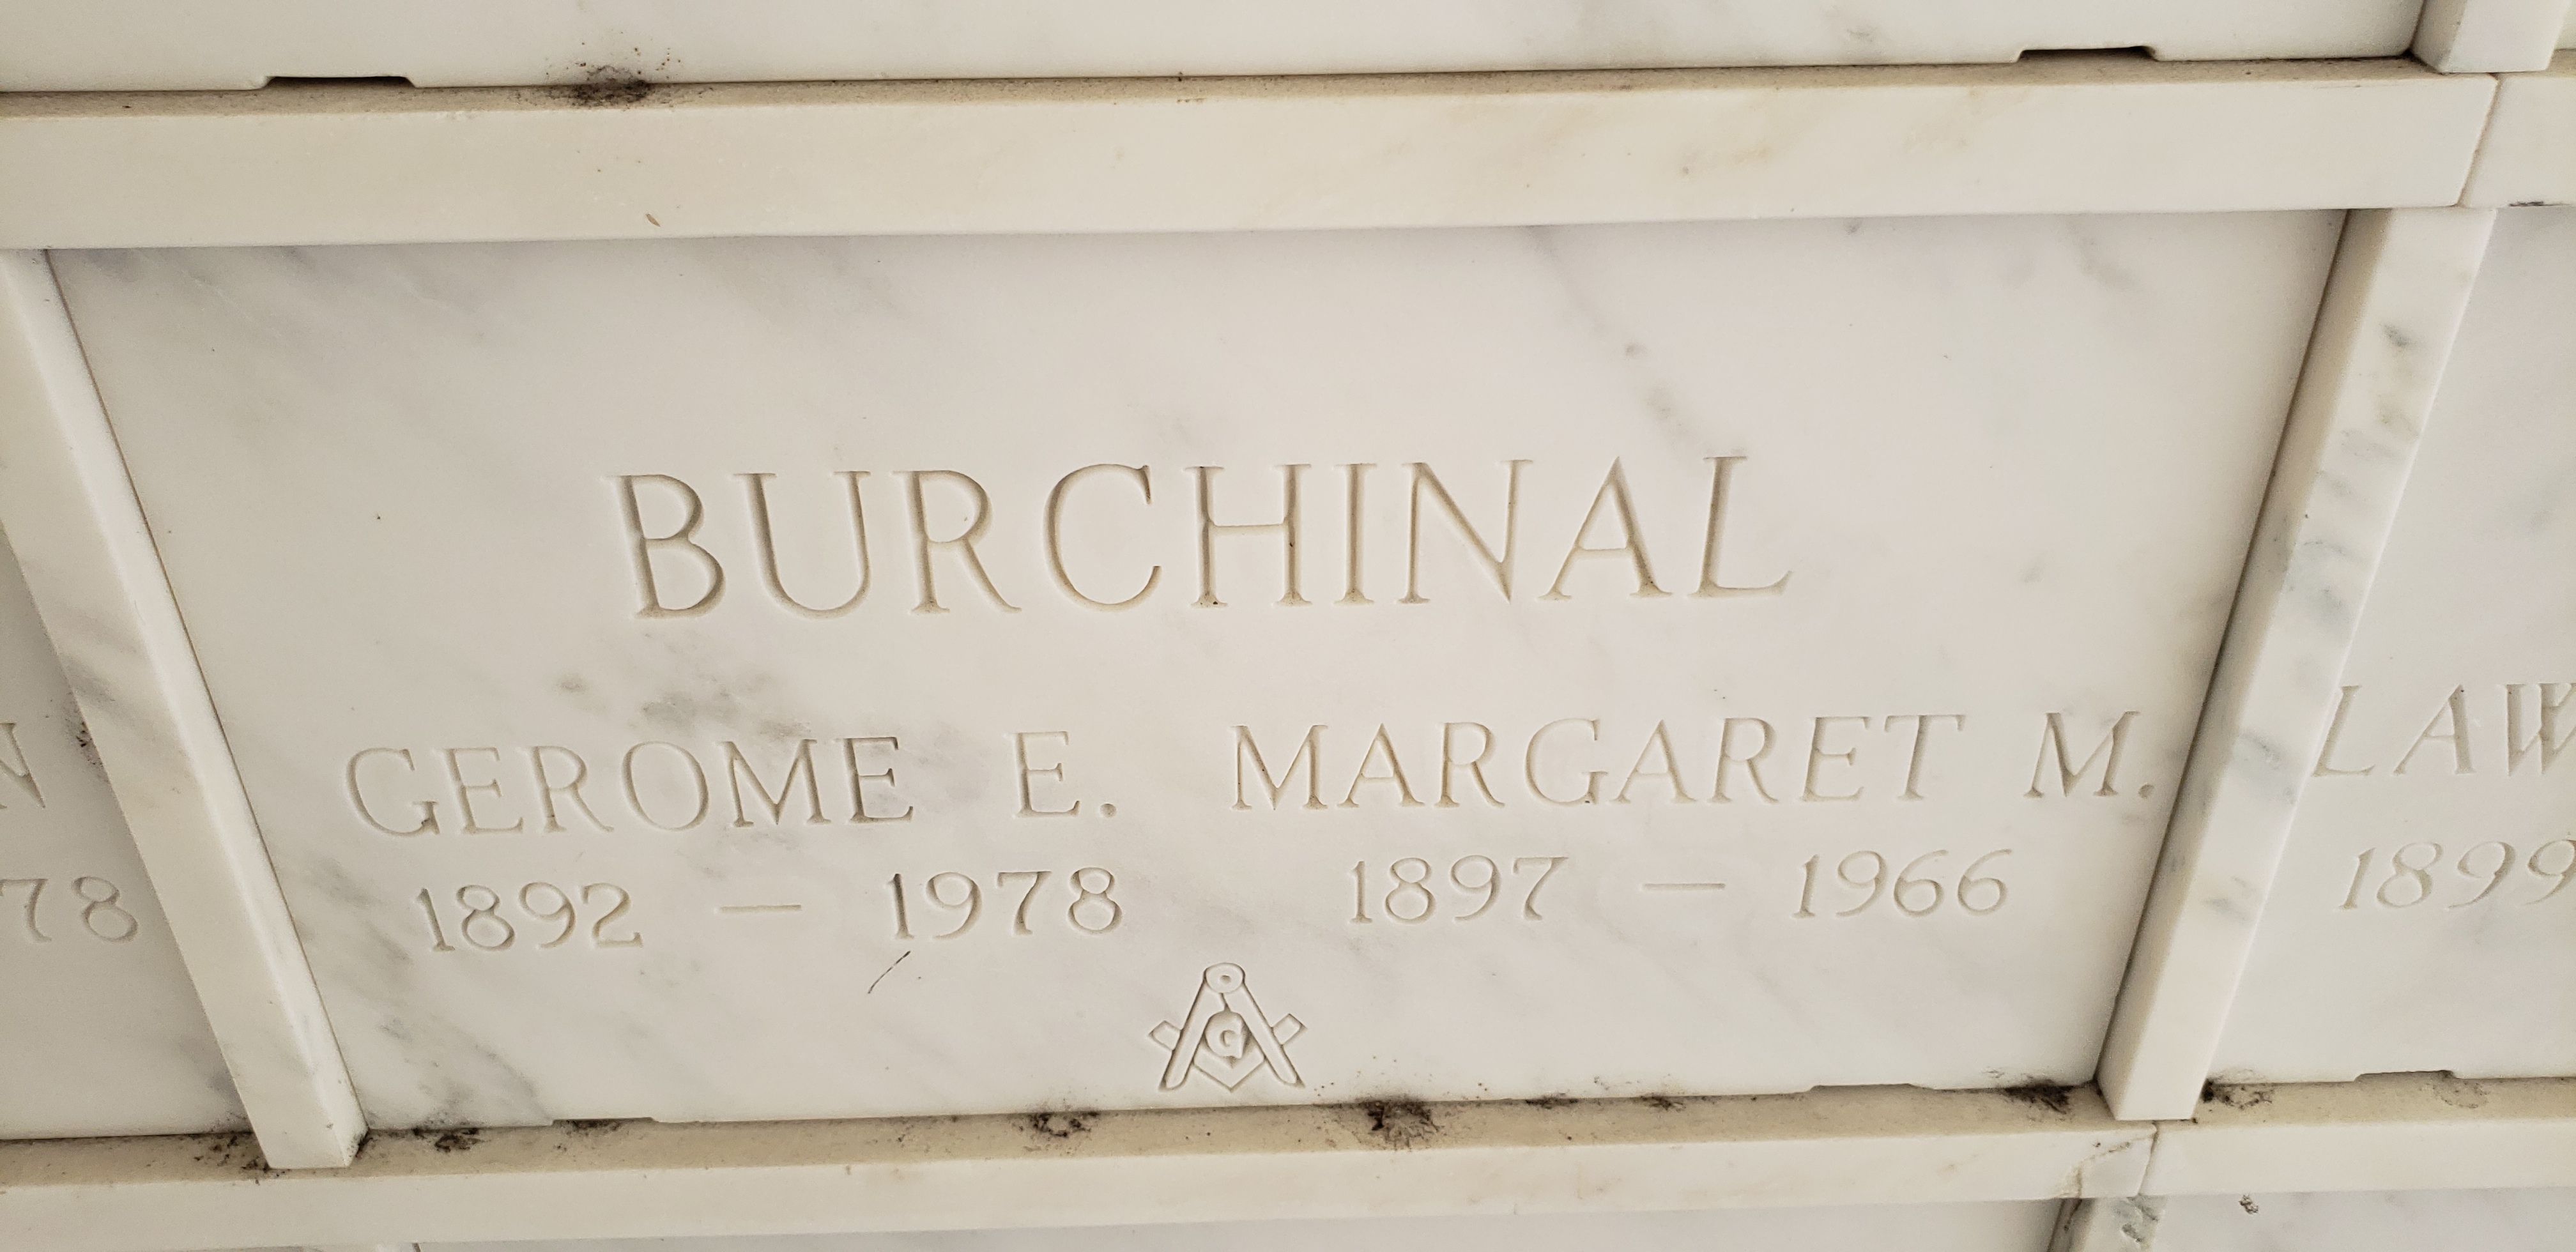 Margaret M Burchinal